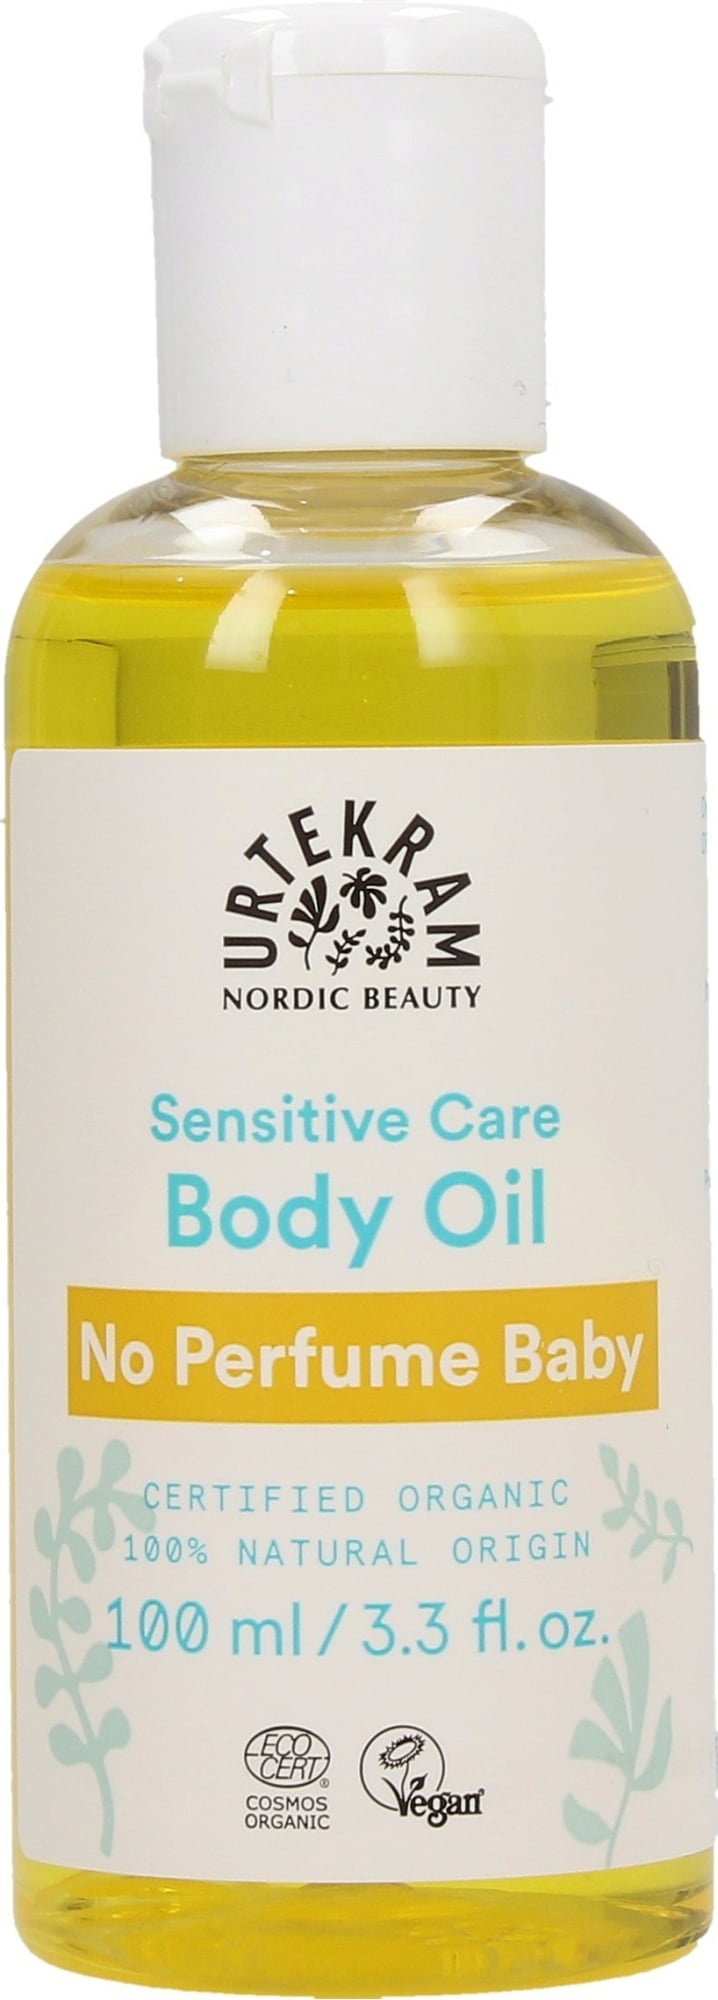 Urtekram No Perfume Baby Body Oil